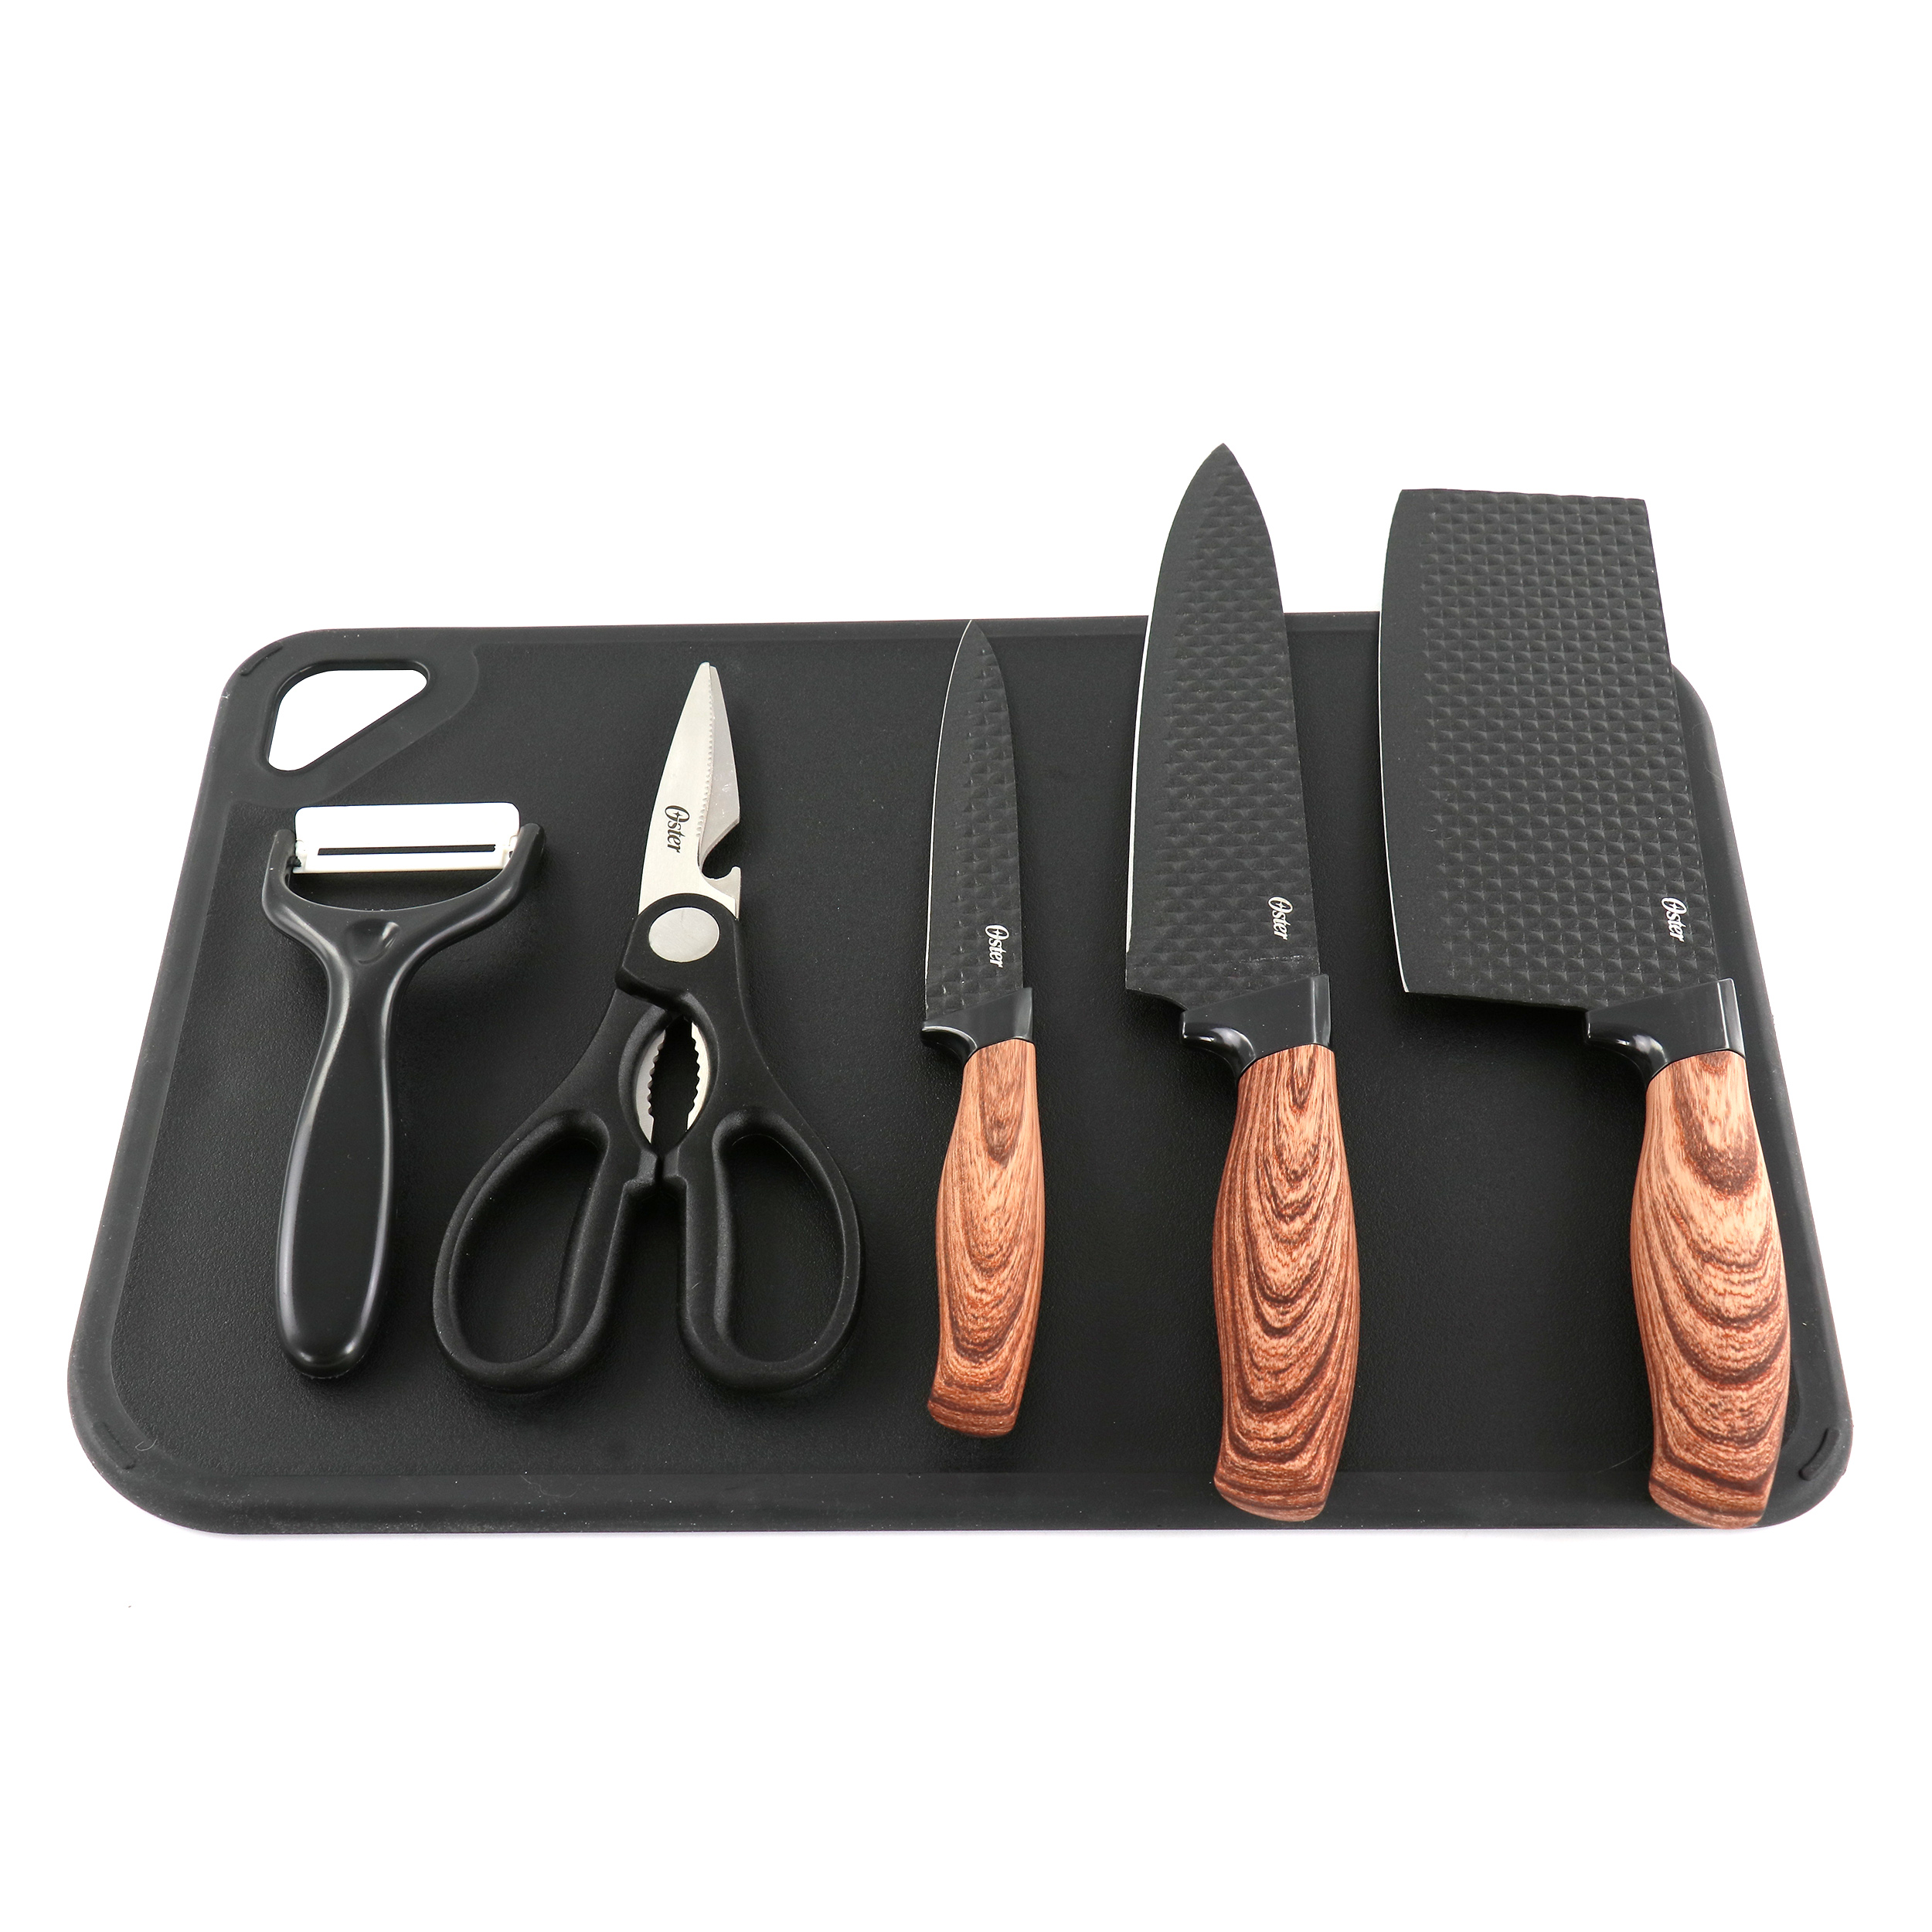 Oster Granger 4-Piece Stainless-Steel Cutlery Set, Black